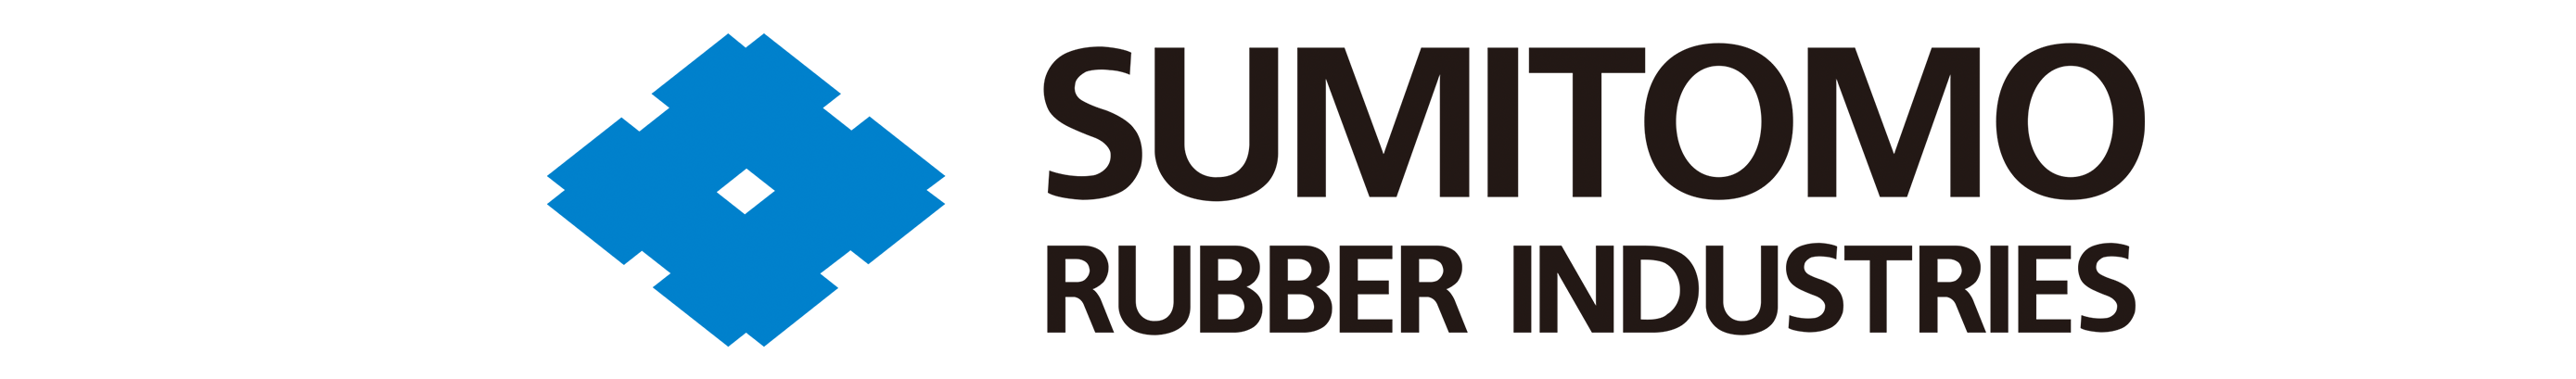 Sumitomo Rubber Industries Logo